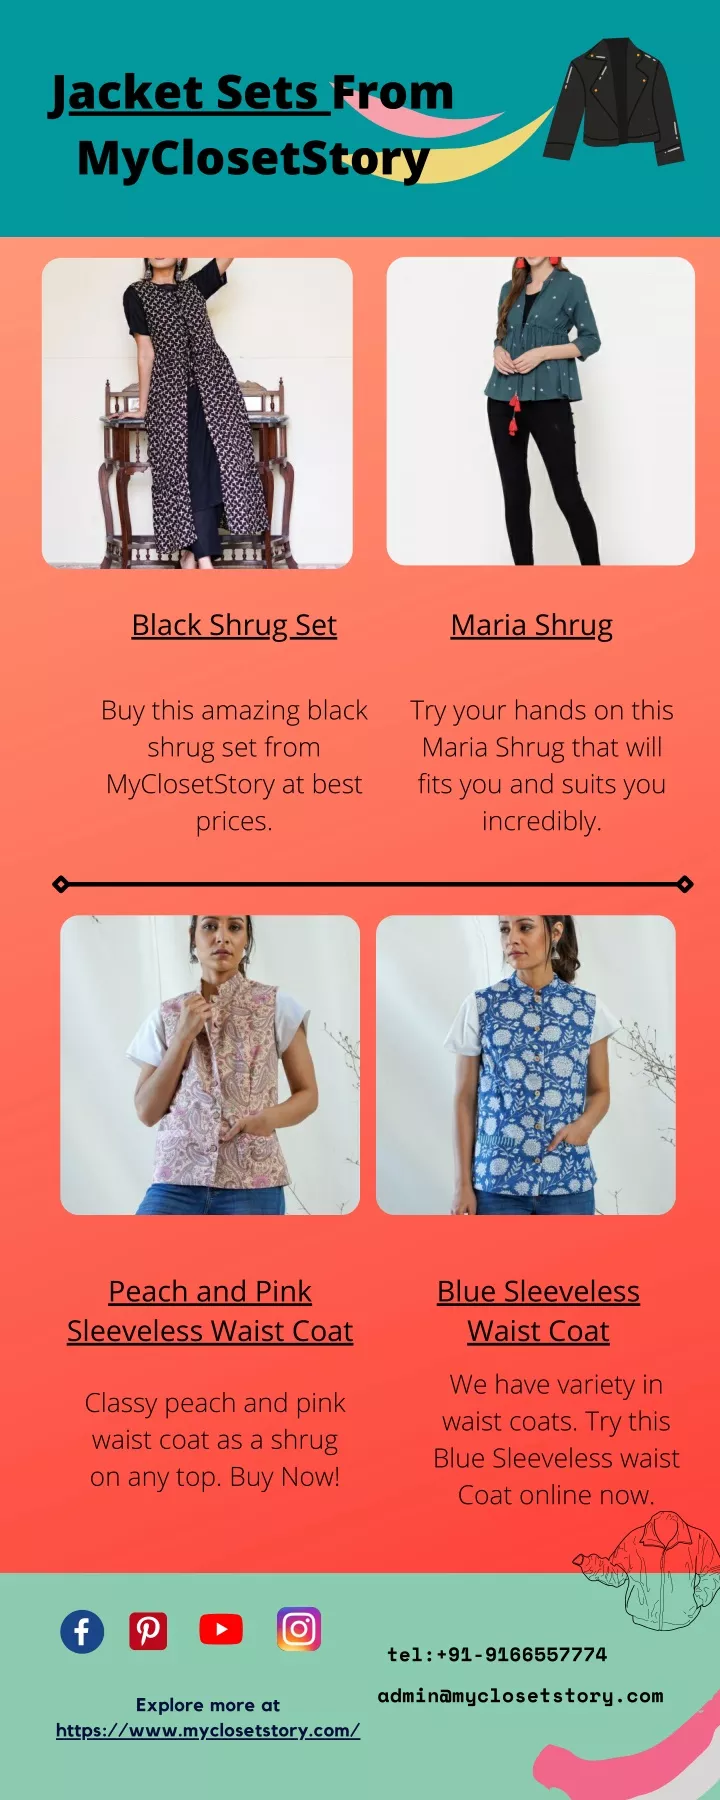 jacket sets from myclosetstory